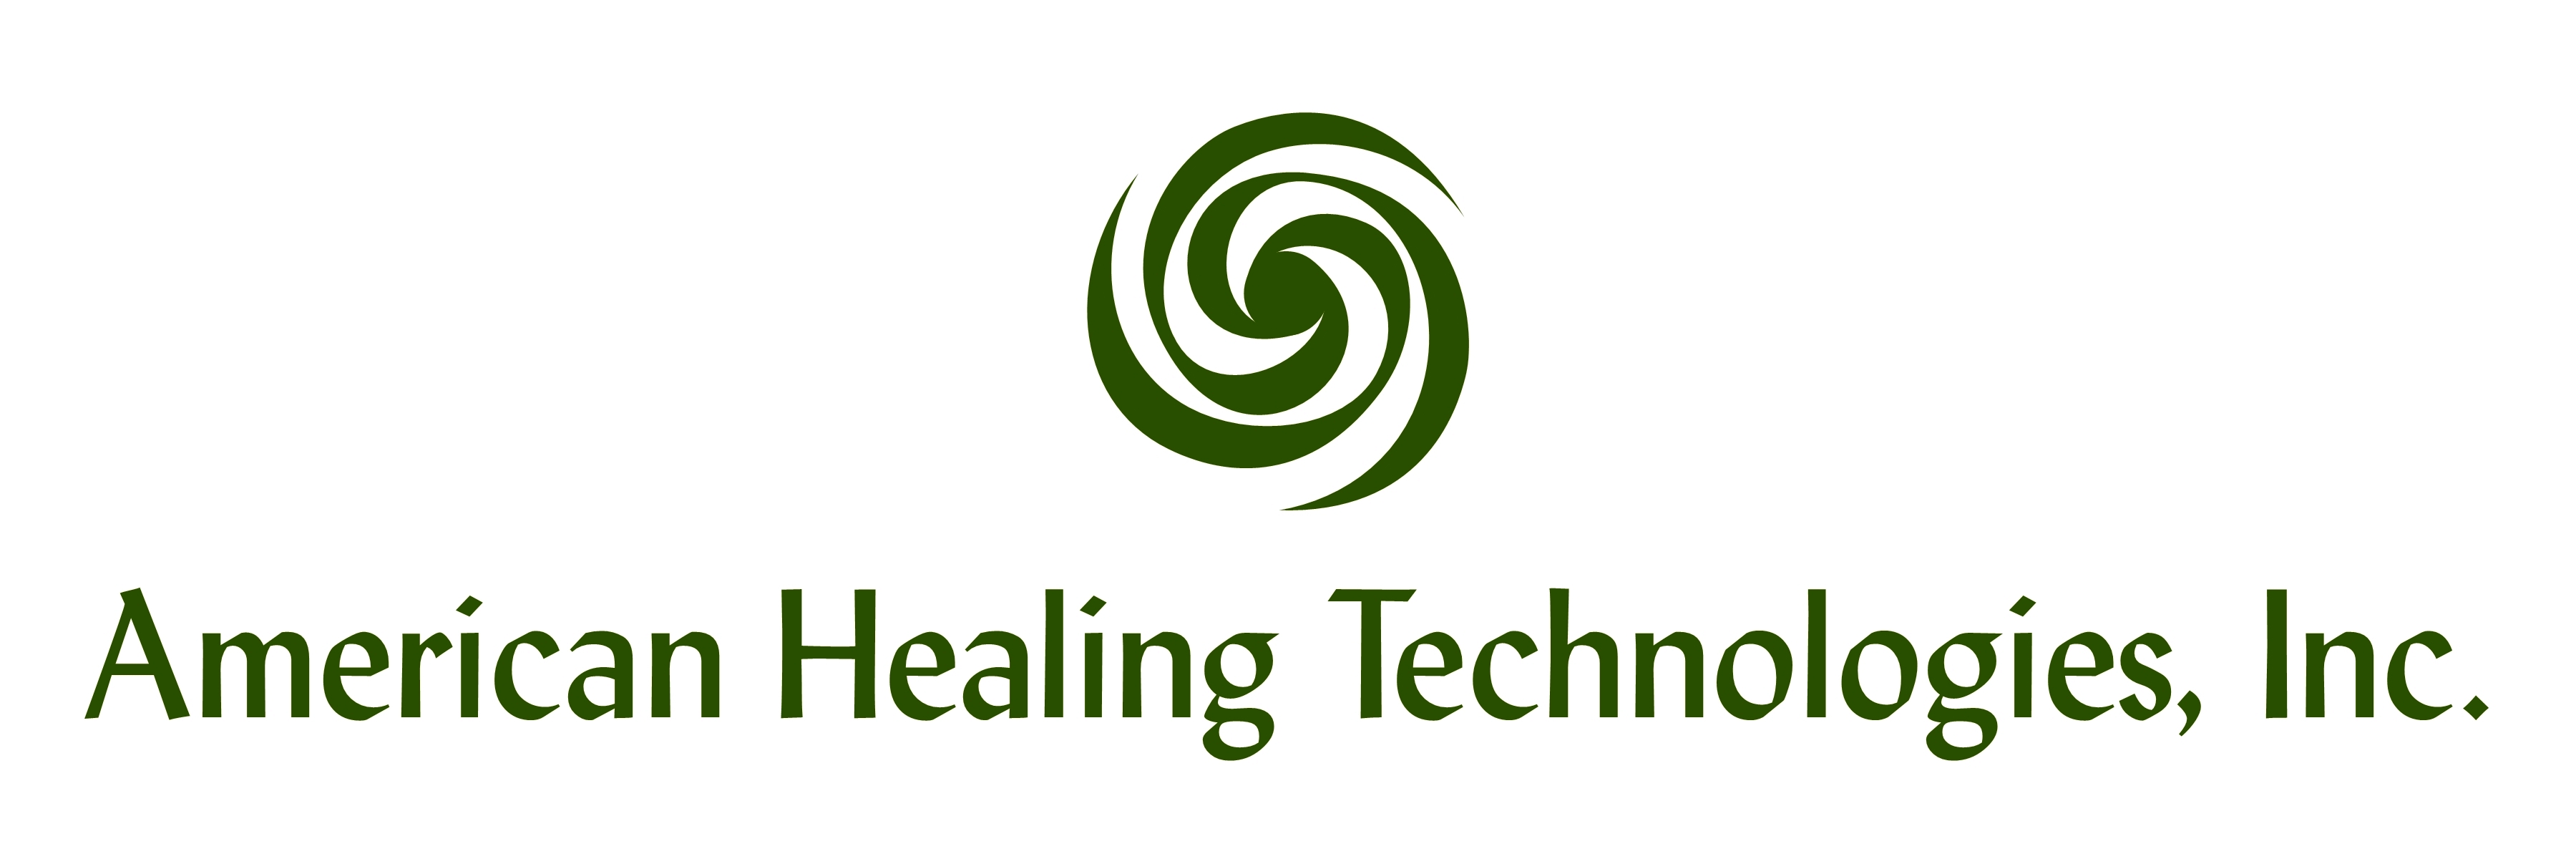 American Healing Technologies logo